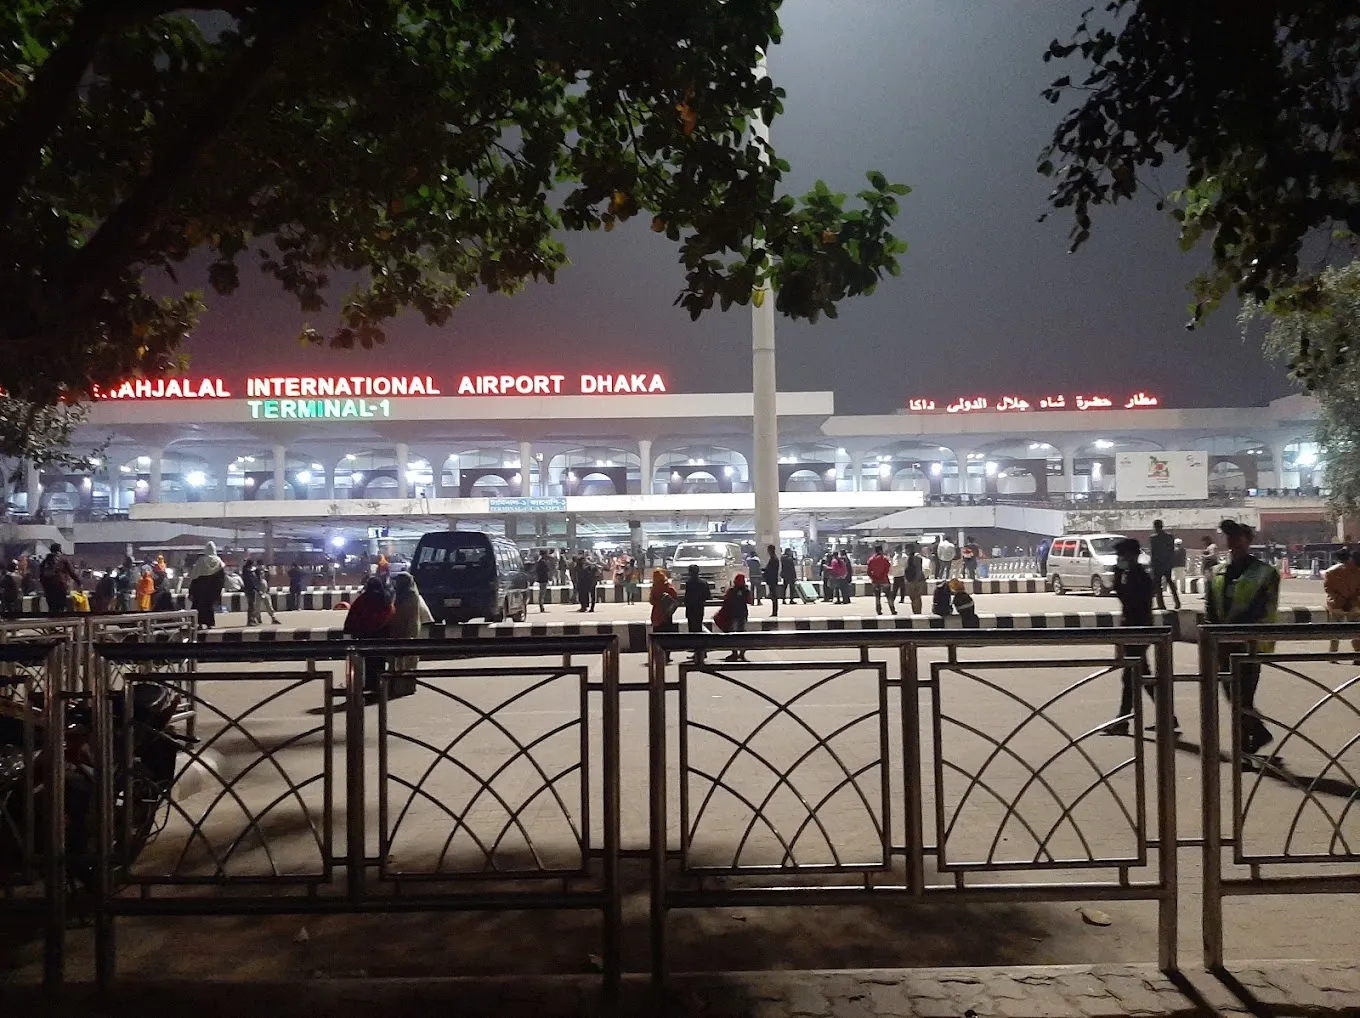 Shahjalal International Airport, Dhaka